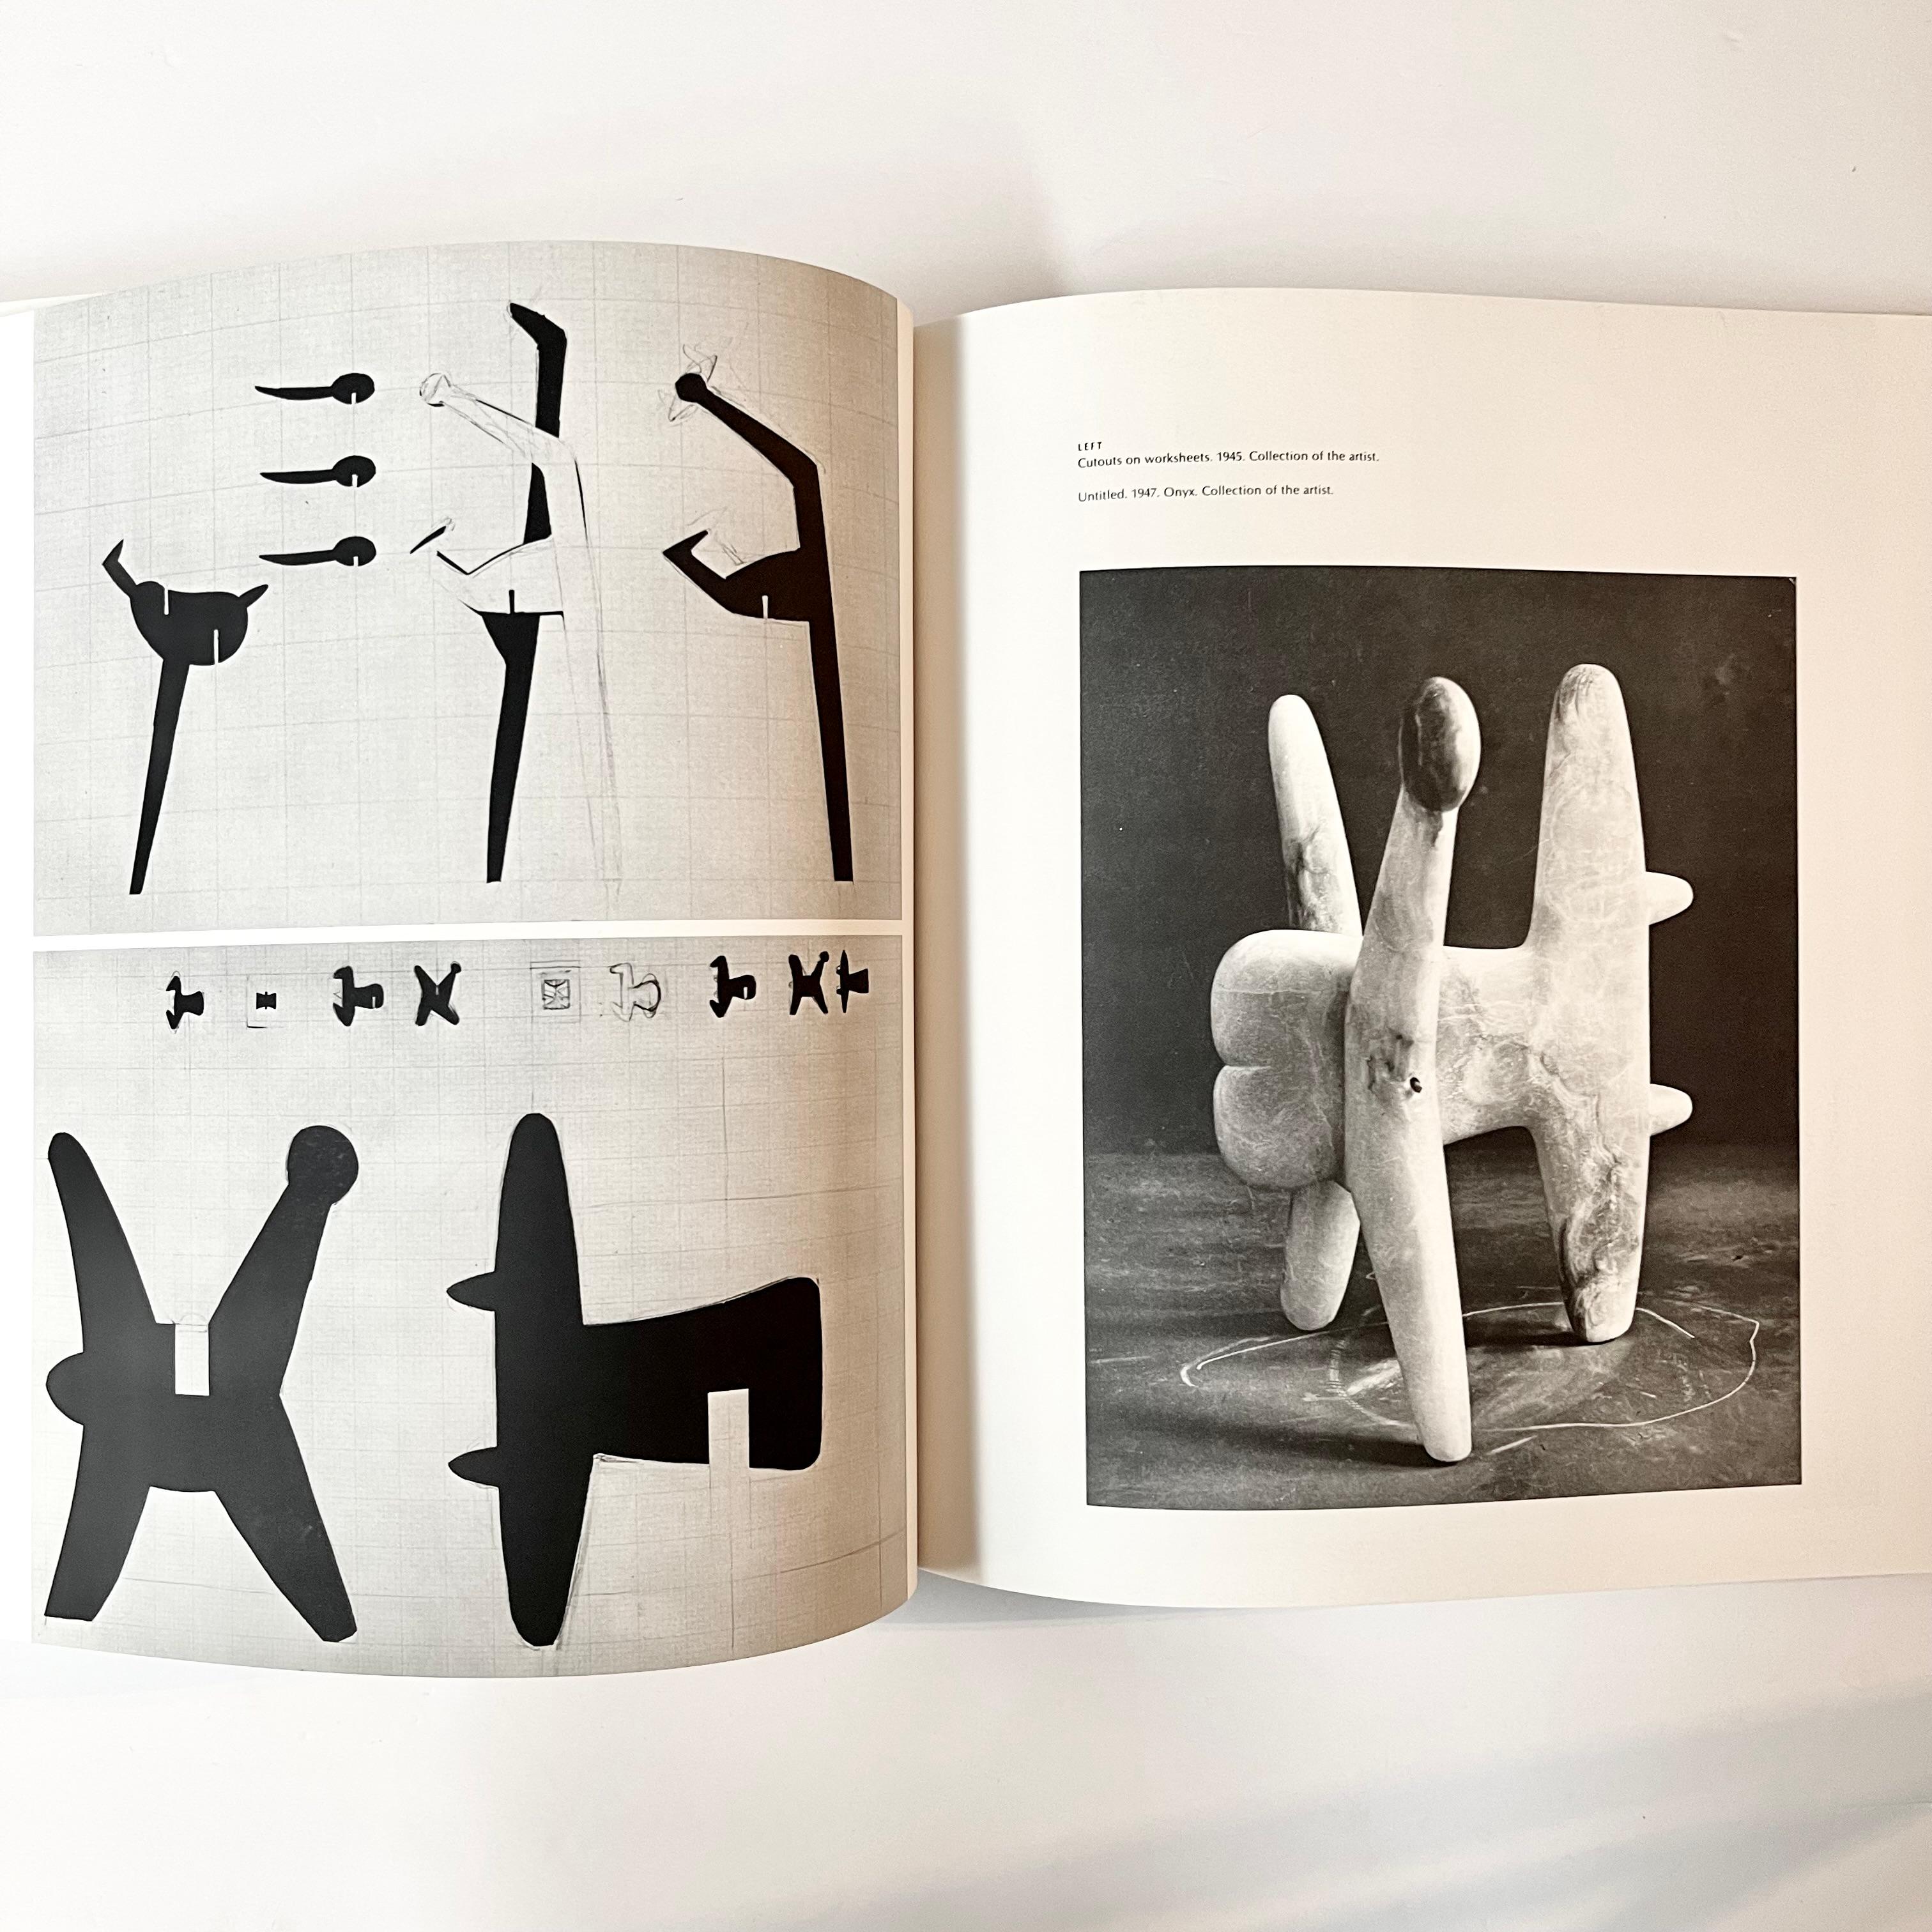 Paper Isamu Noguchi by Sam Hunter 1st Edition 1979 For Sale